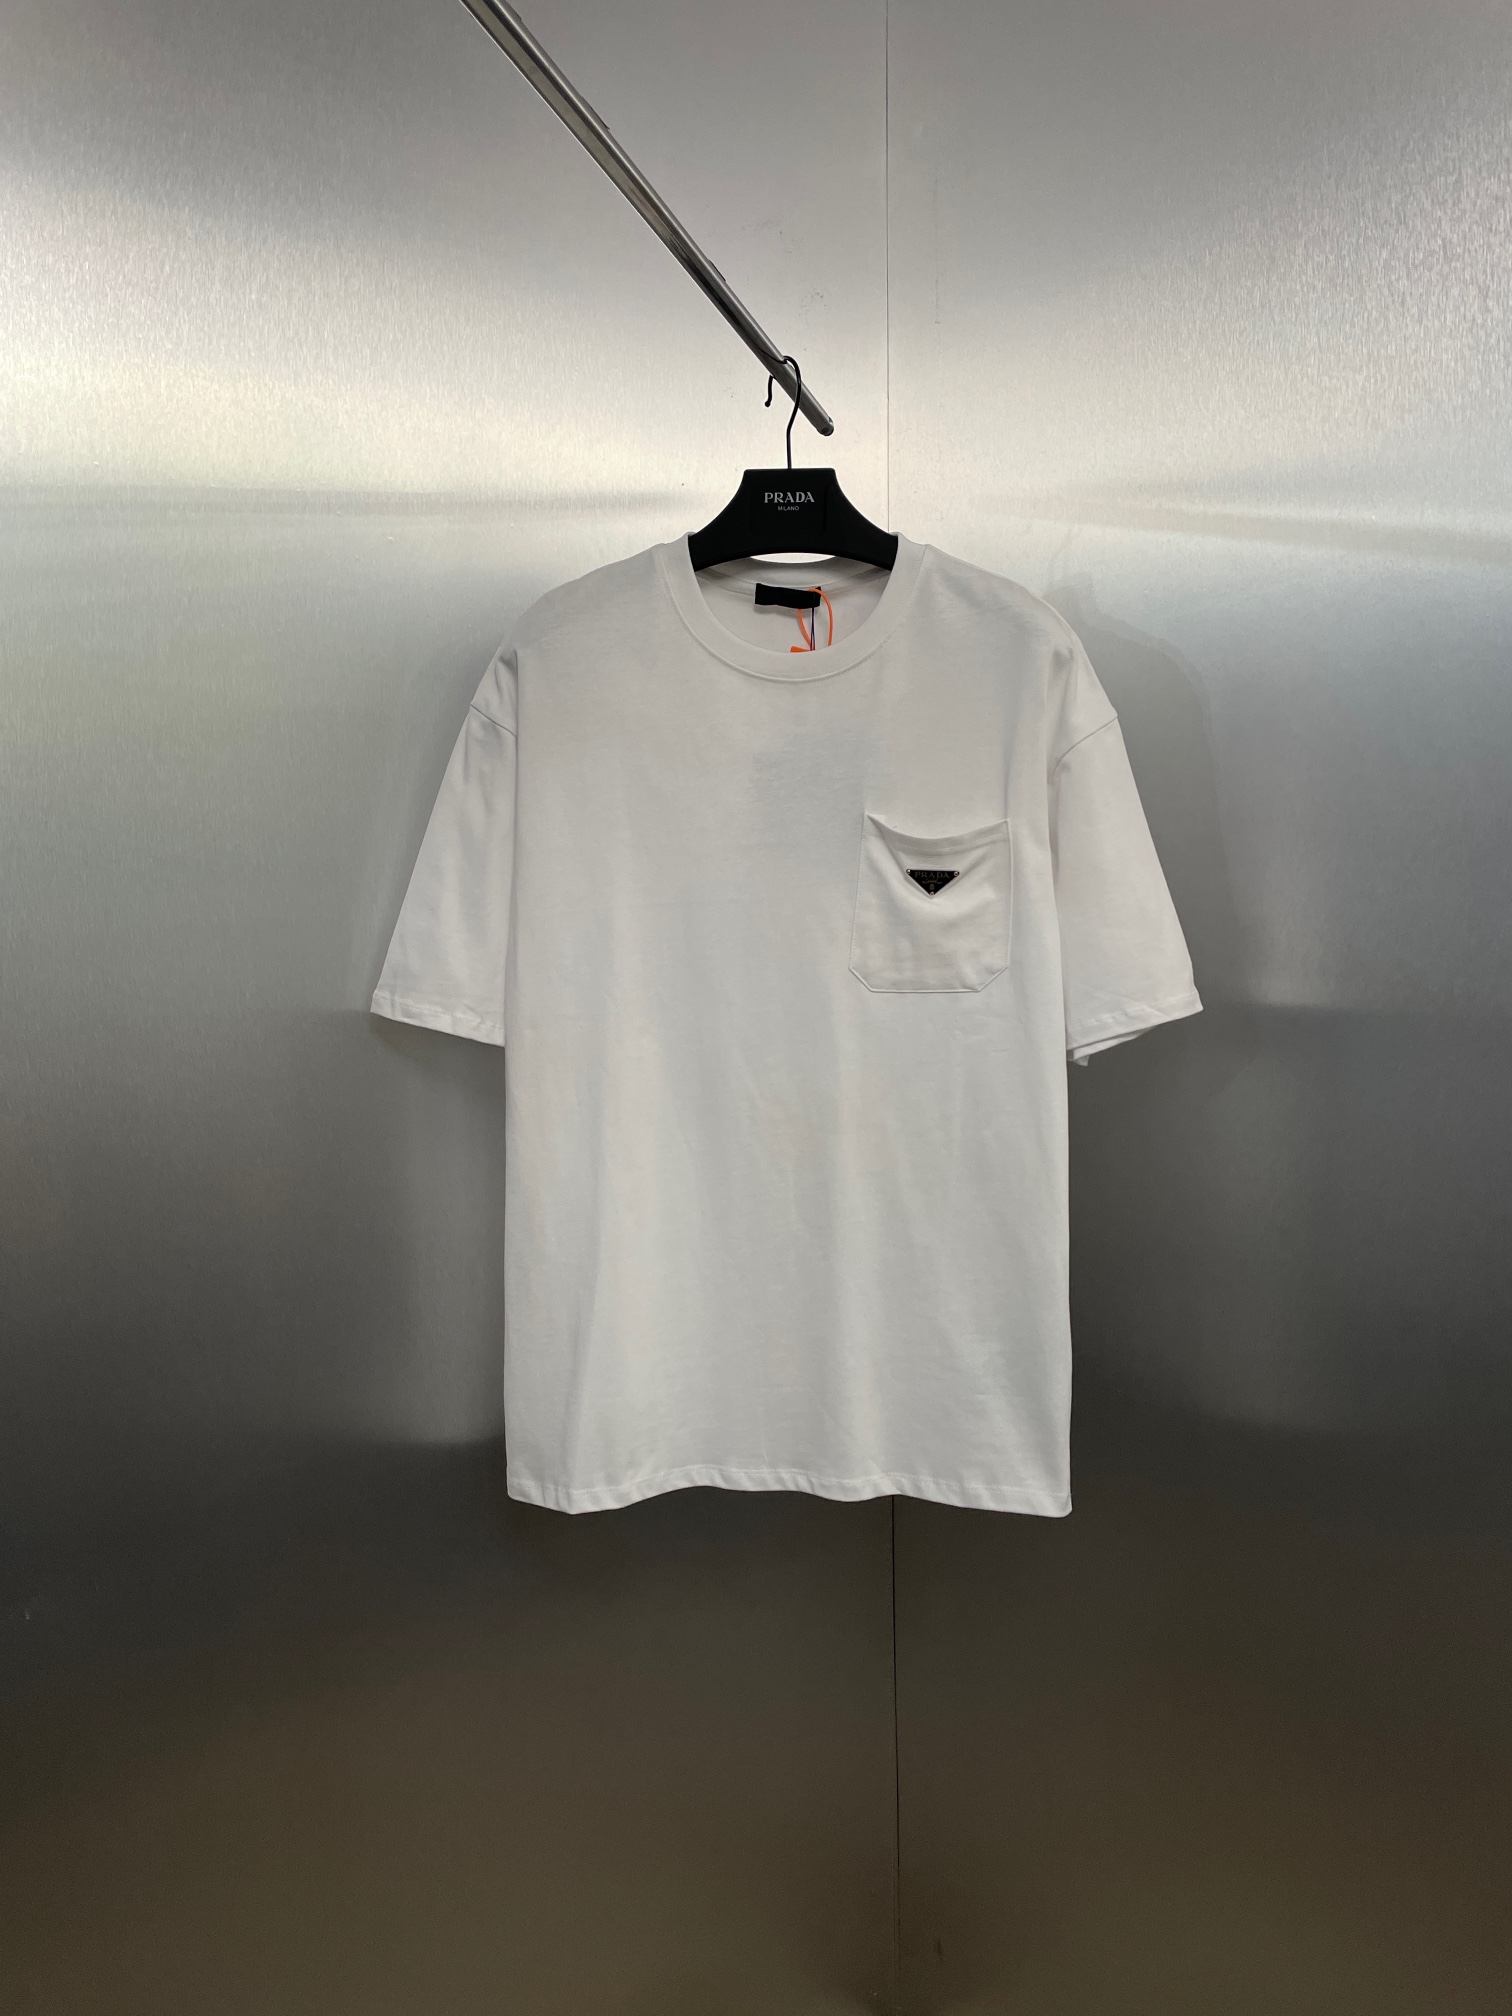 Prada Flawless
 Clothing T-Shirt Black White Unisex Cotton Short Sleeve